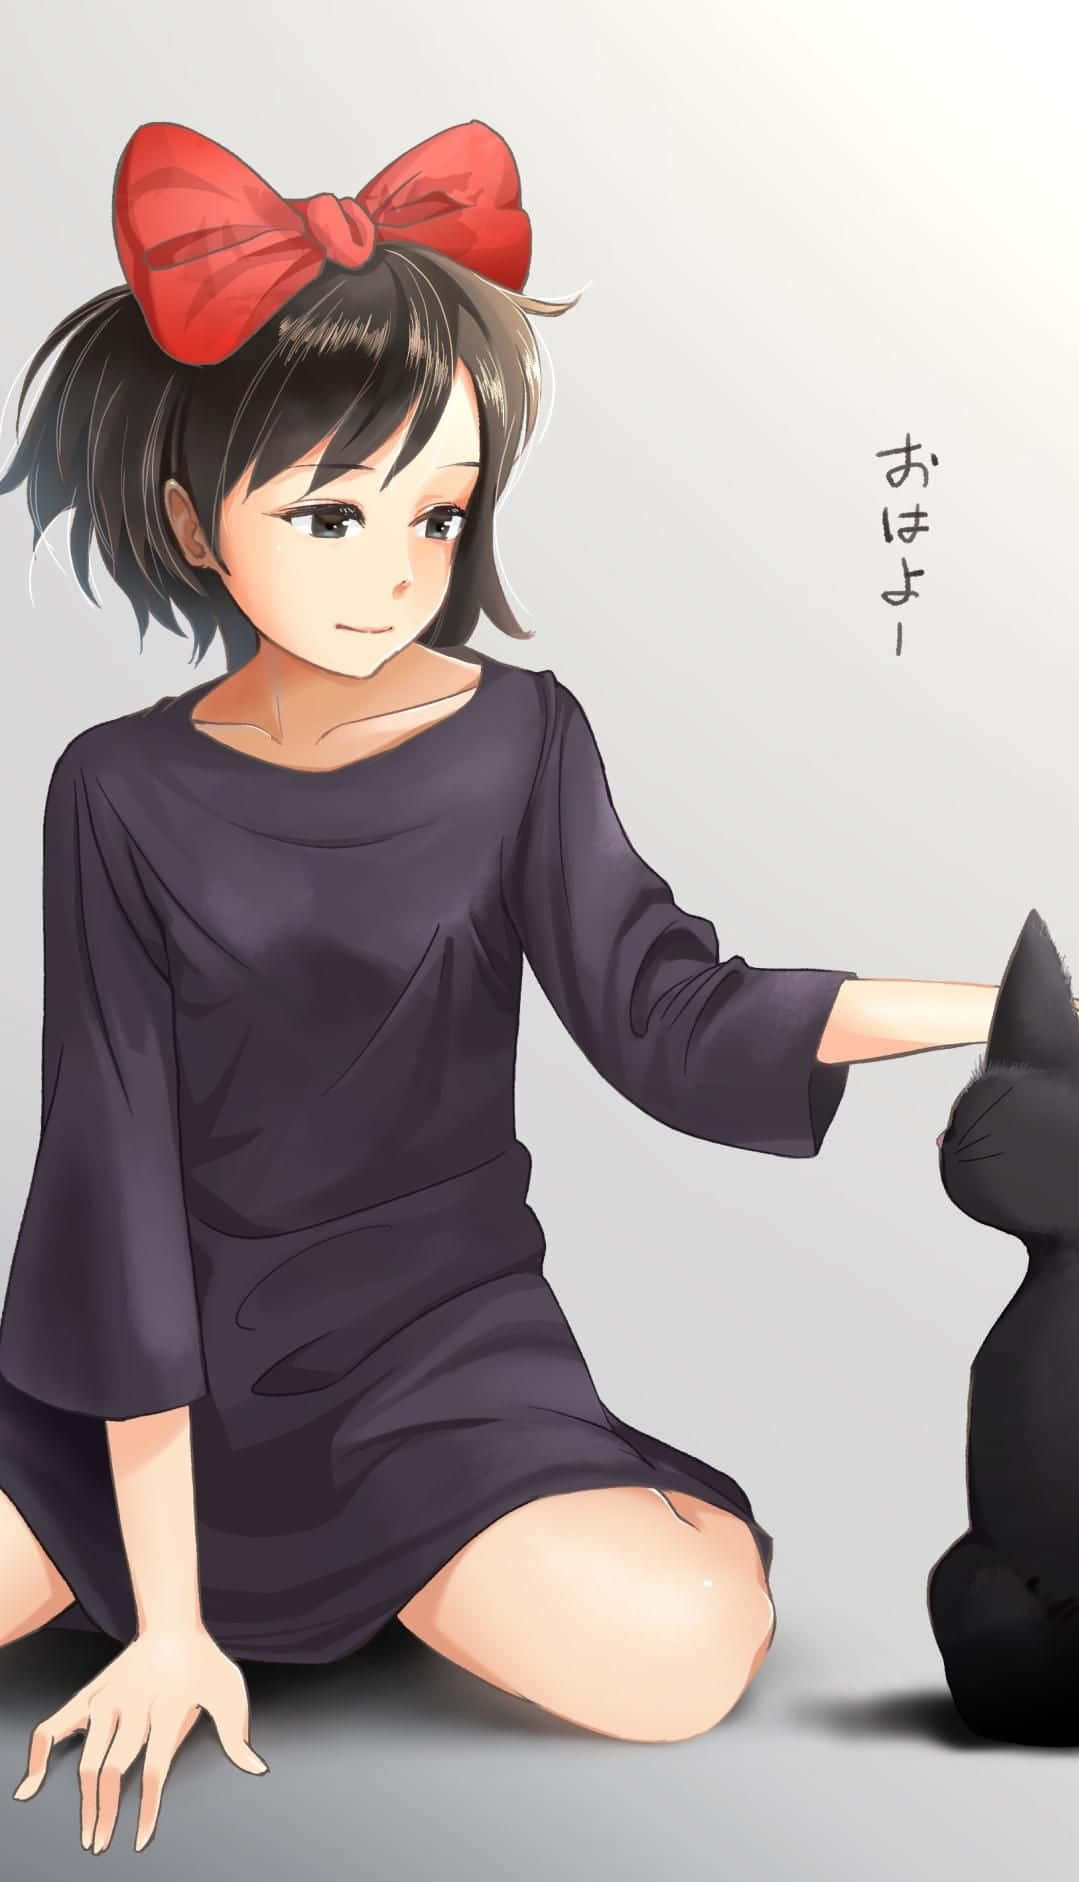 Jiji the Black Cat from Studio Ghibli Wallpaper